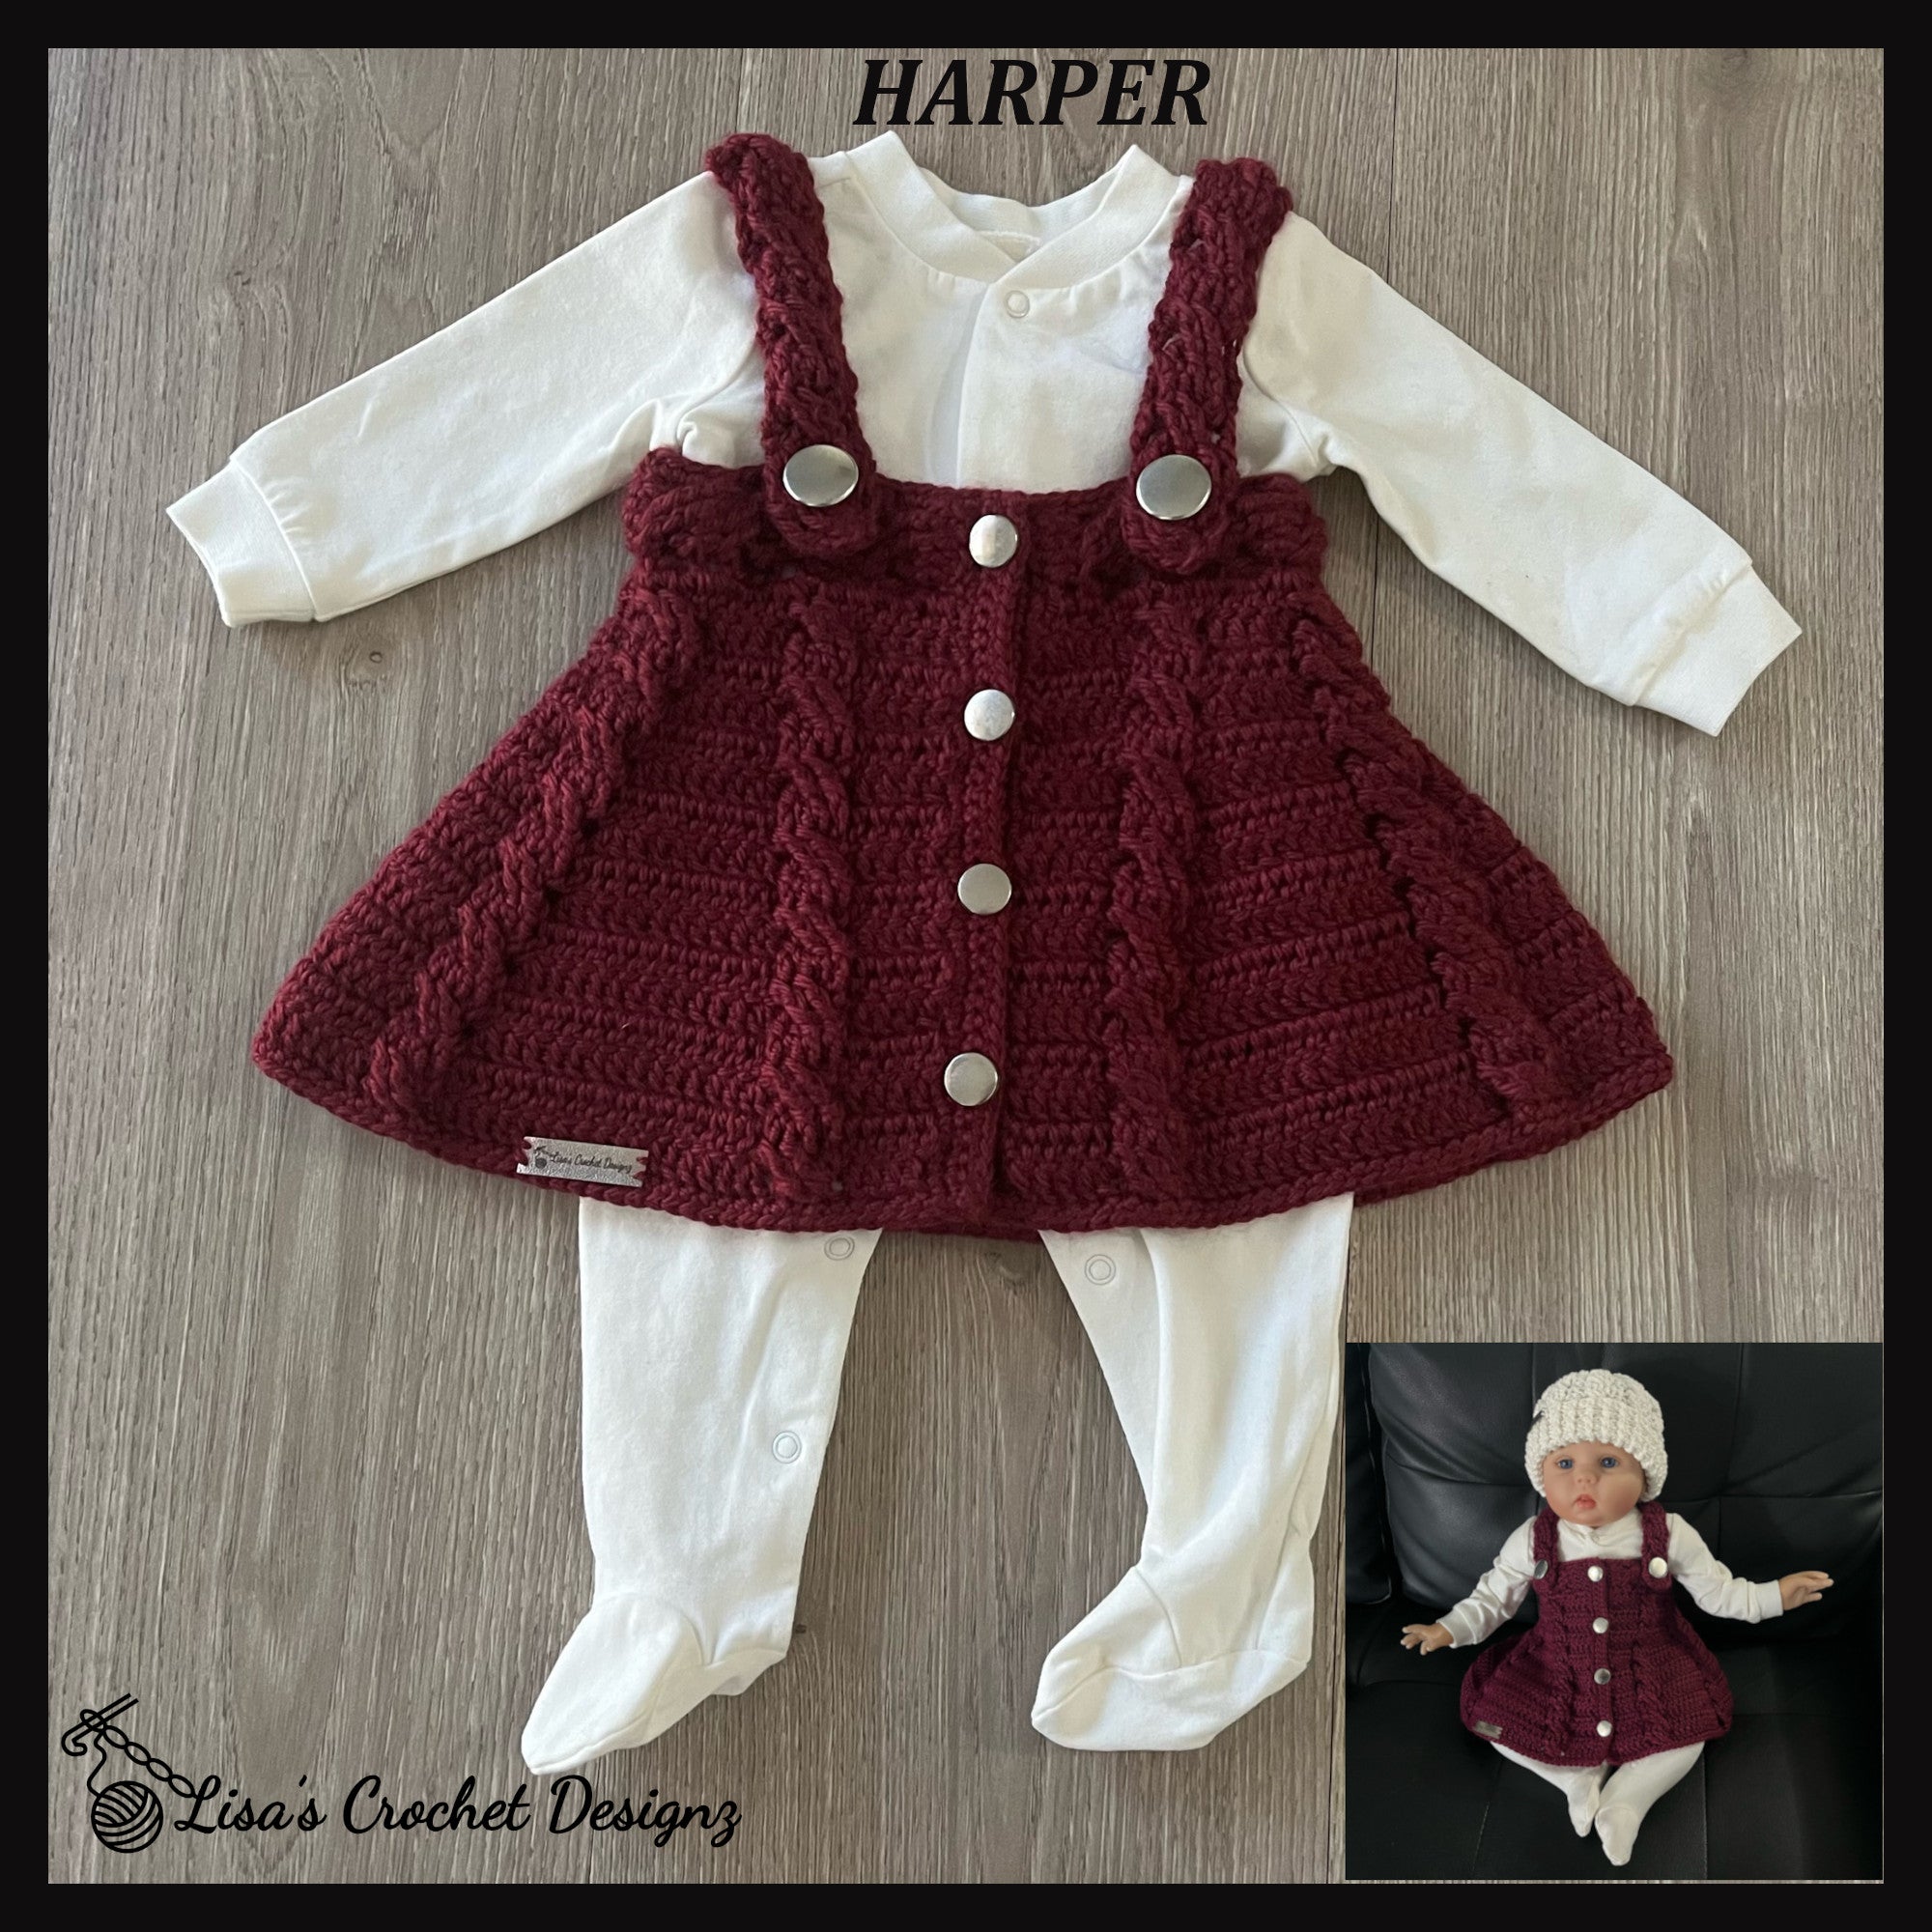 A Crochet Baby Dress pdf pattern - Inspire Uplift